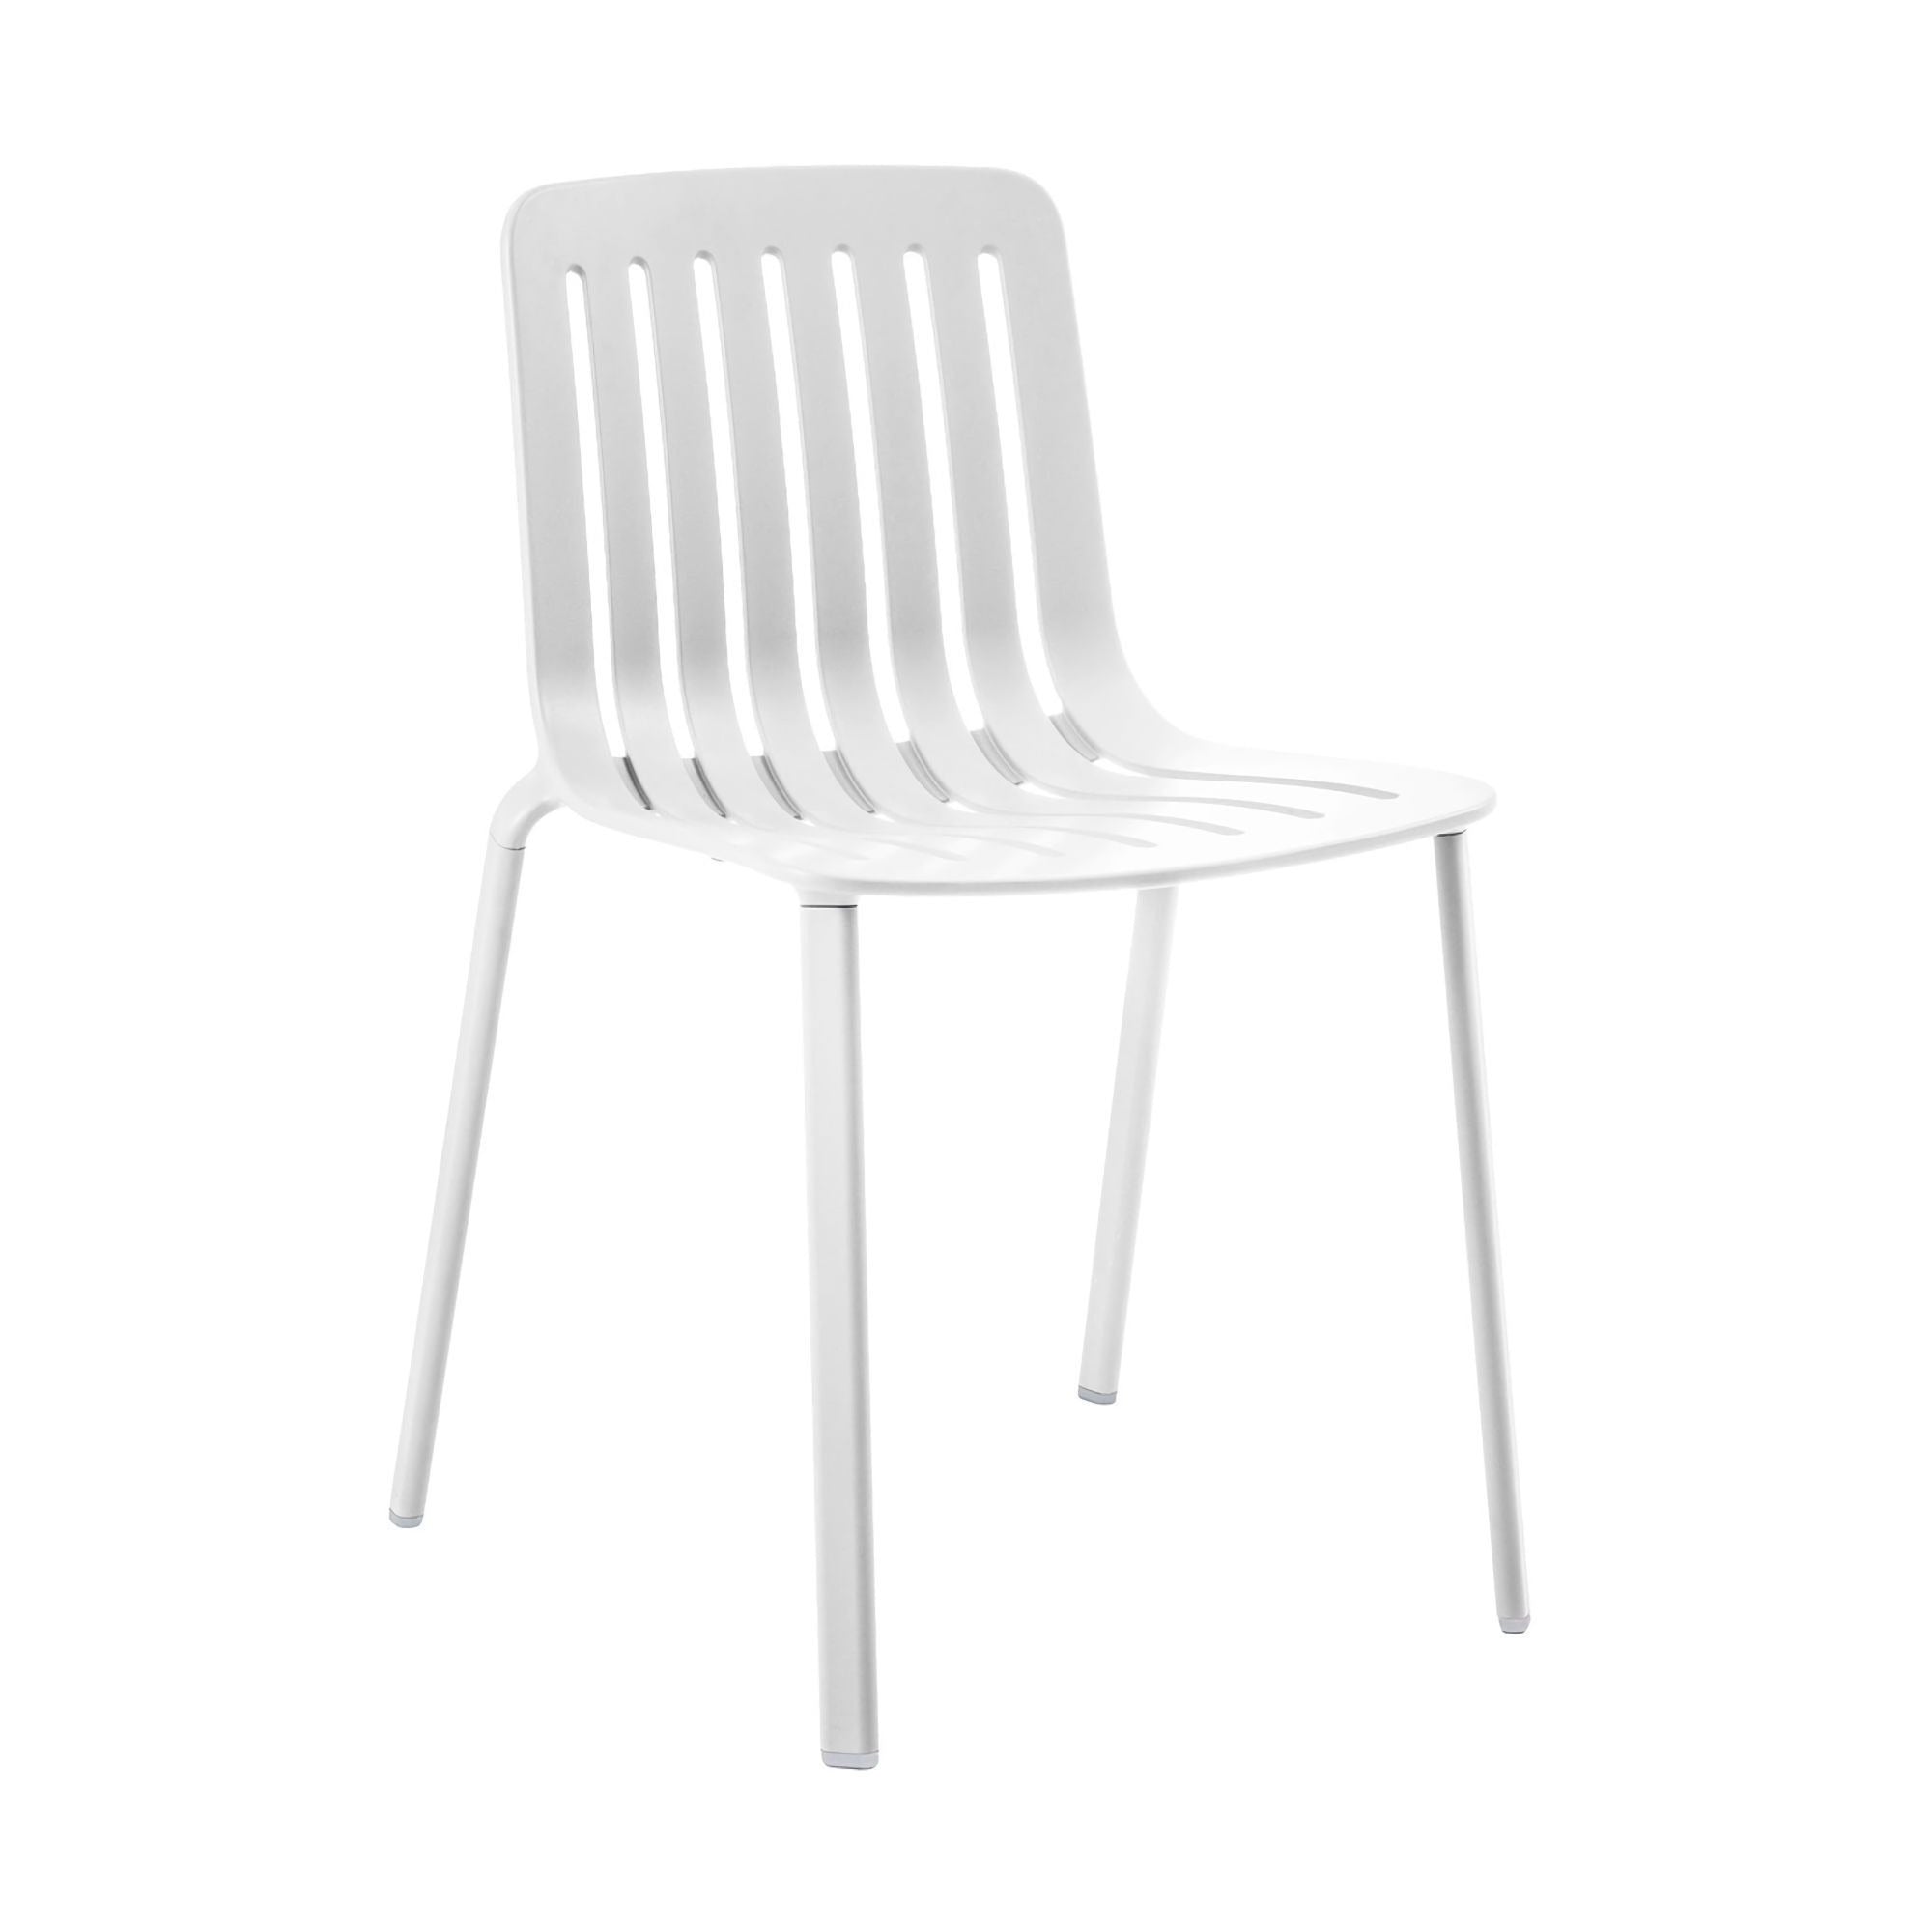 Magis Plato chair, white (outdoor)